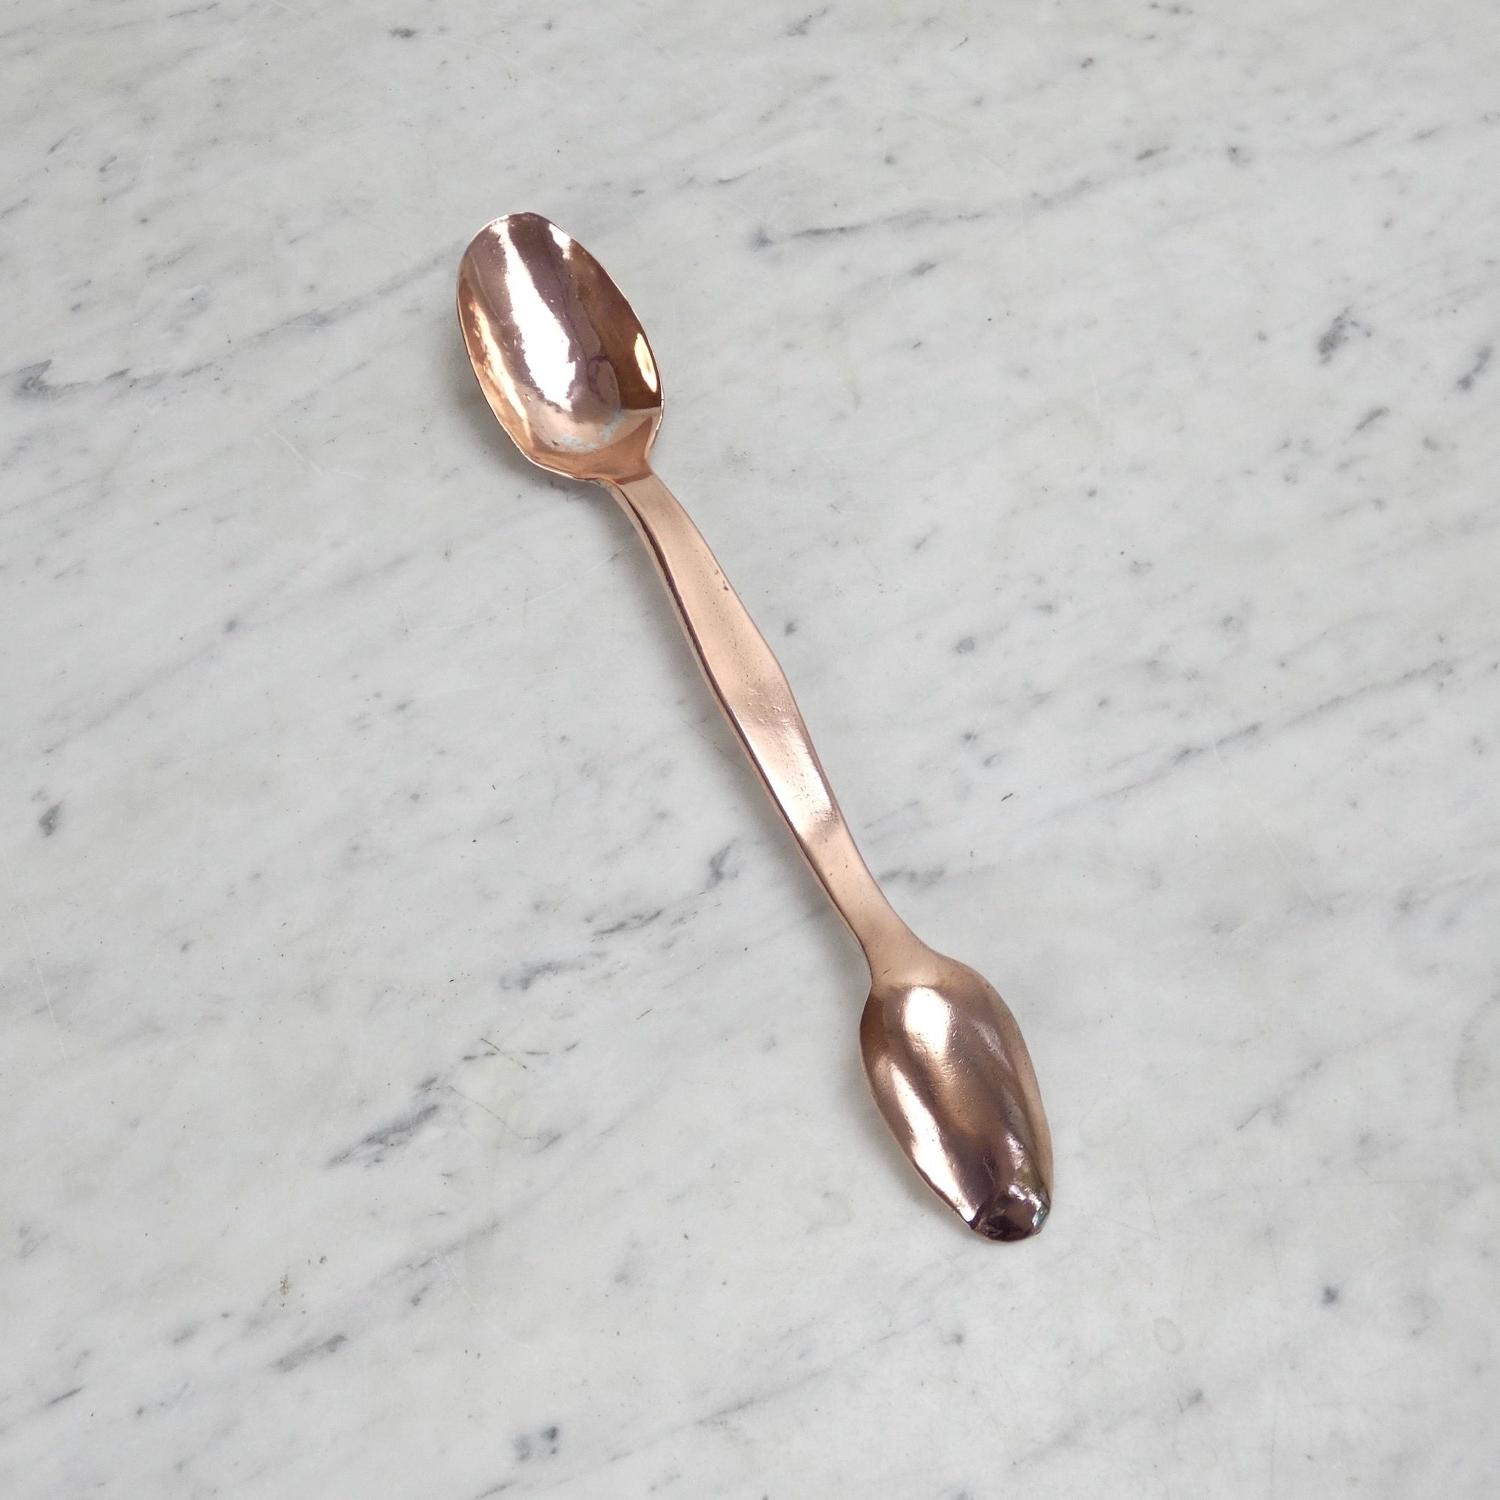 Copper measuring spoon